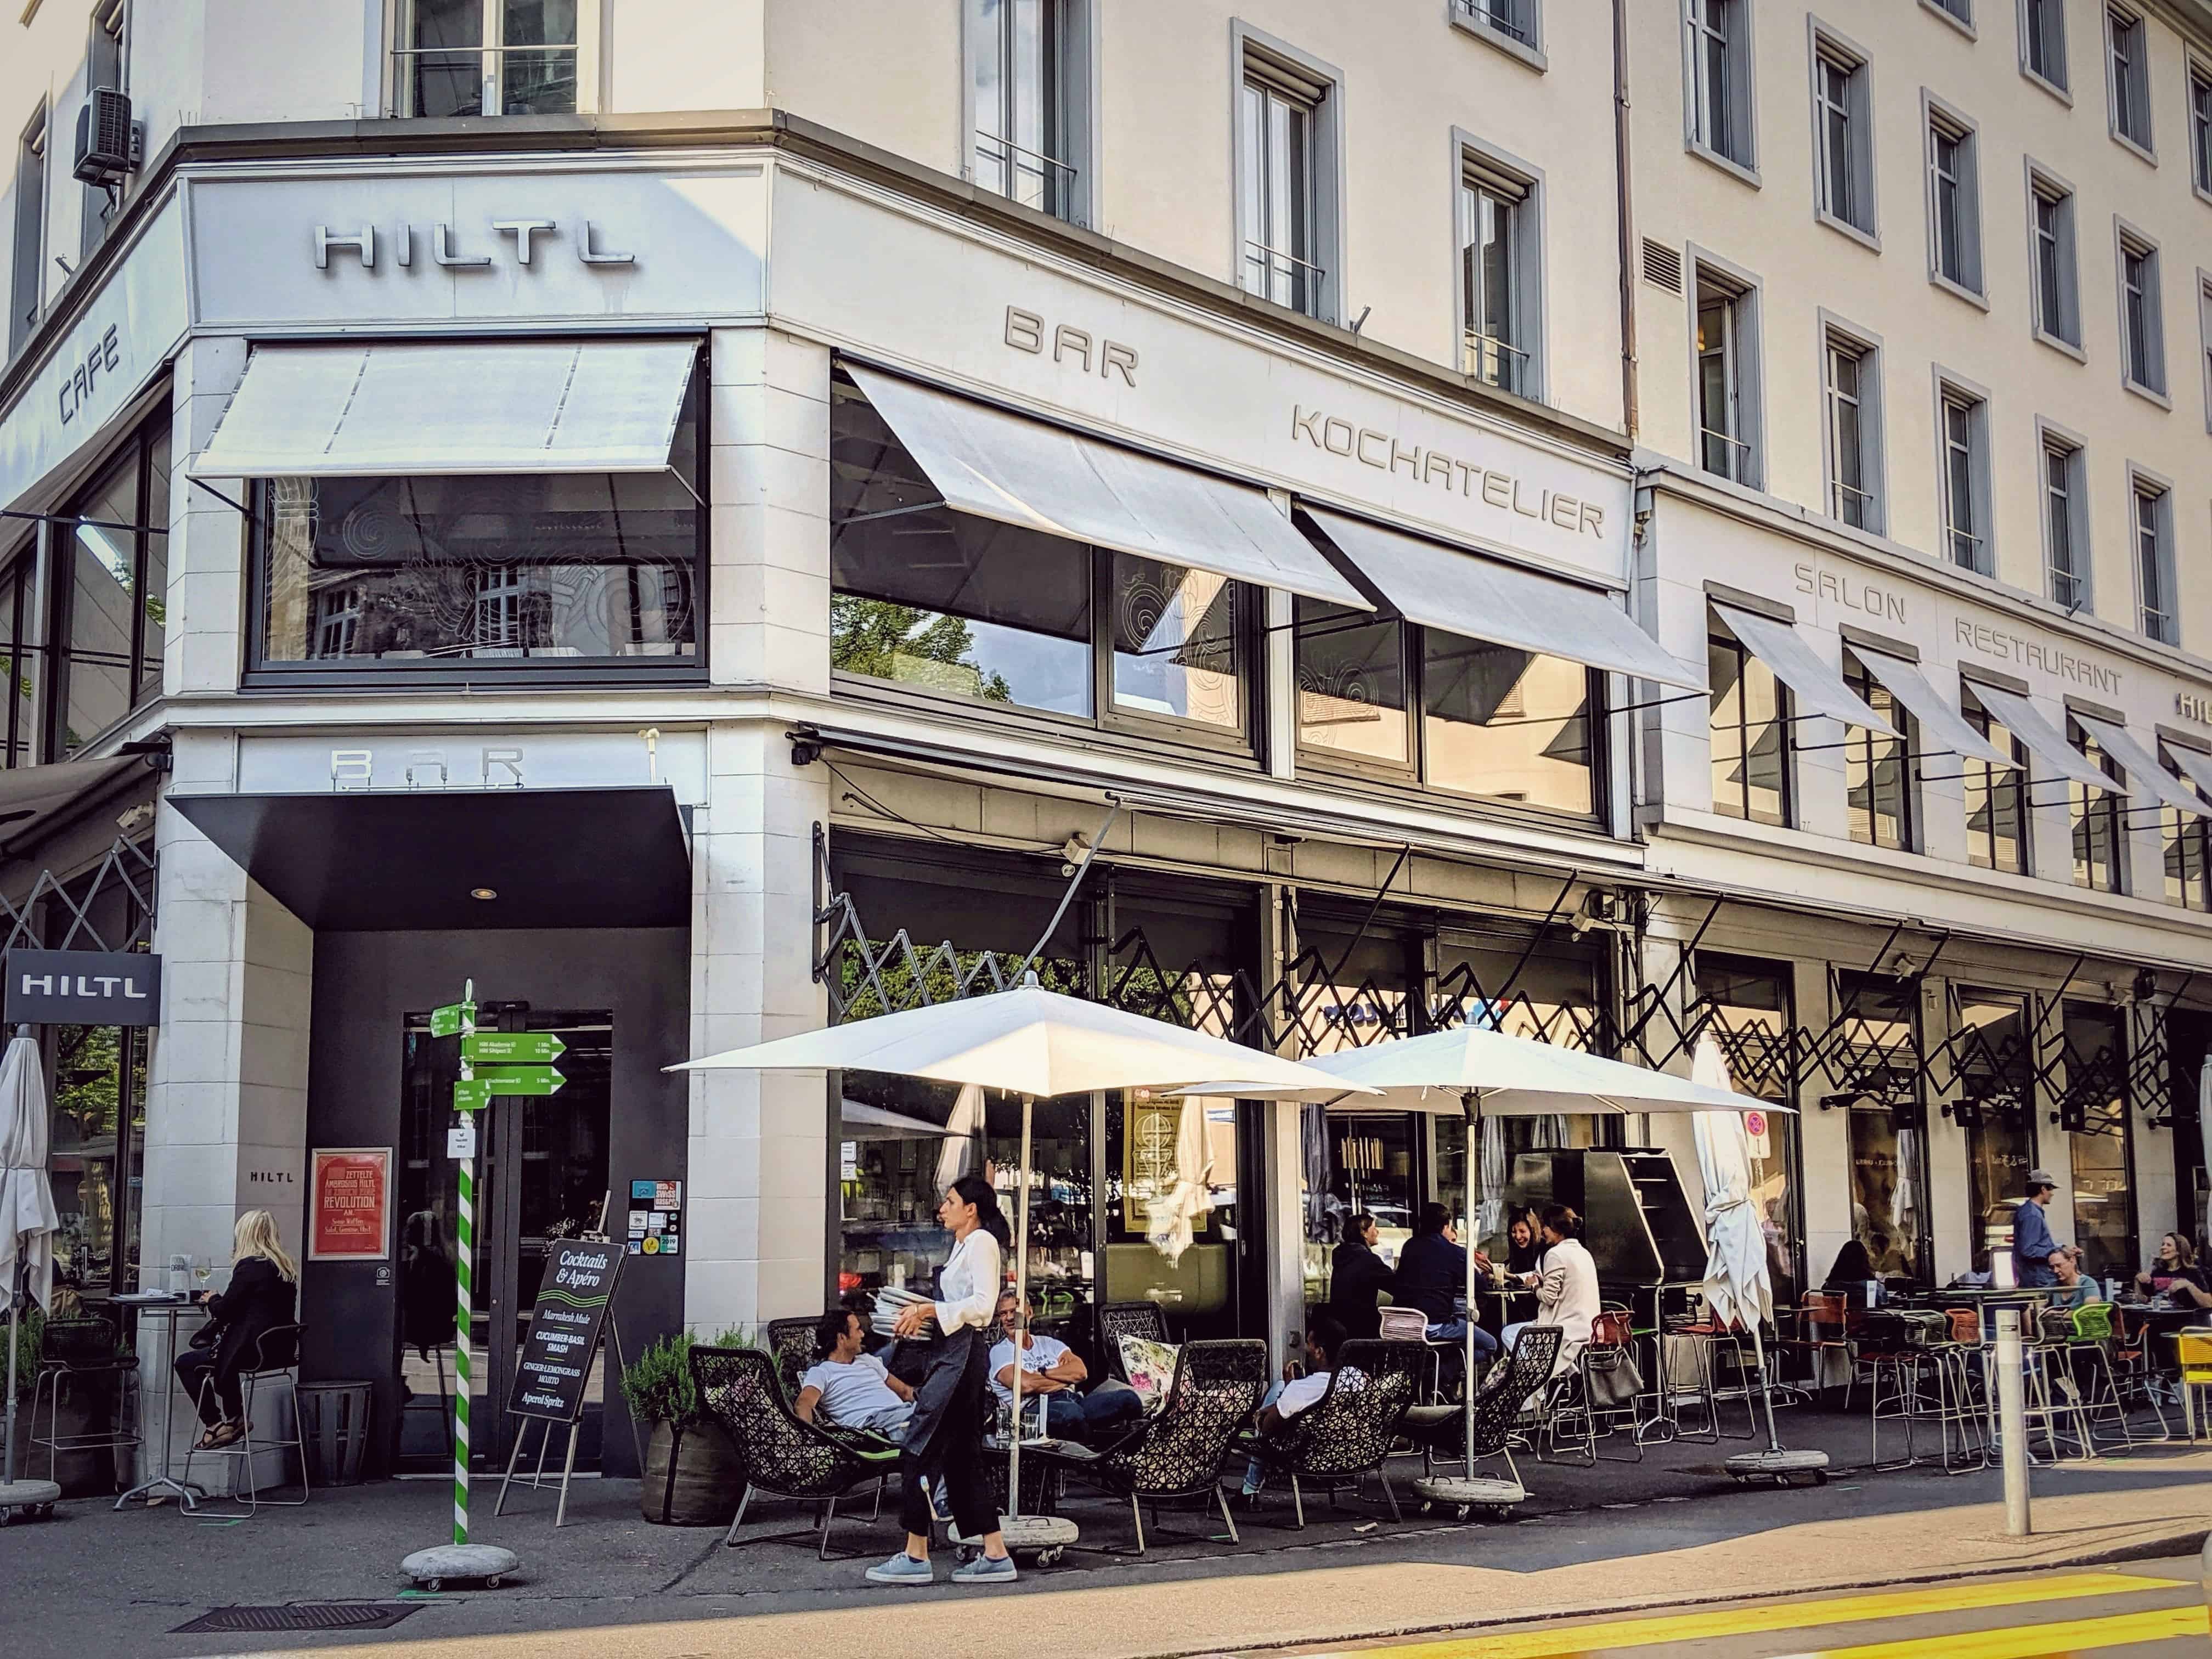 periode forretning På jorden Best Restaurants in Kreis 1, Zurich (Old Town) | Tasty Trips